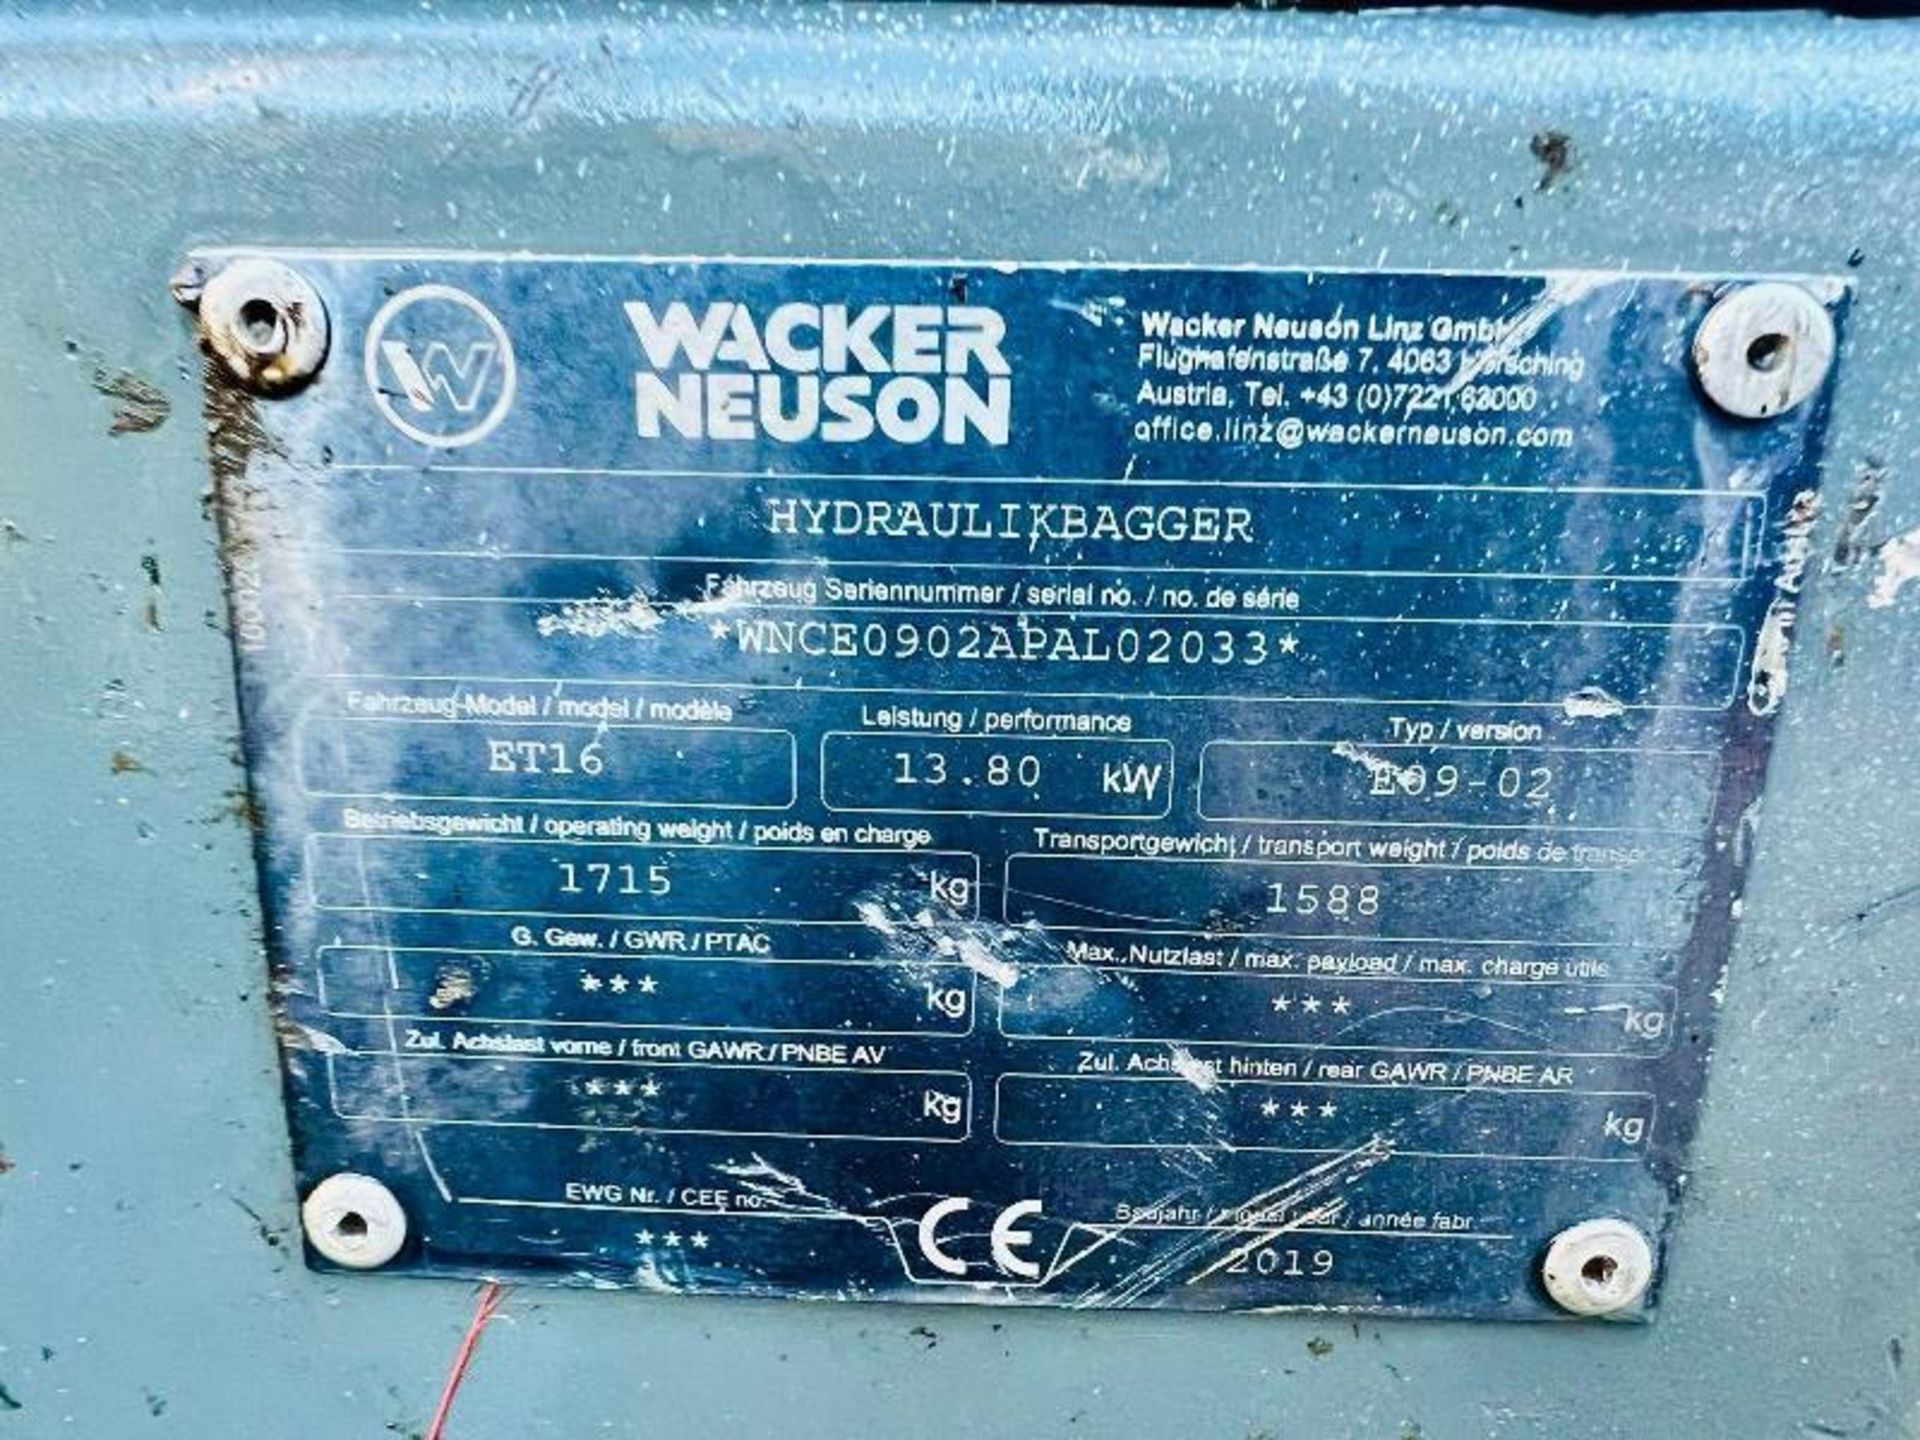 WACKER NEUSON ET16 EXCAVATOR *YEAR 2019, 2198 HOURS* C/W EXPANDING TRACKS - Image 8 of 16